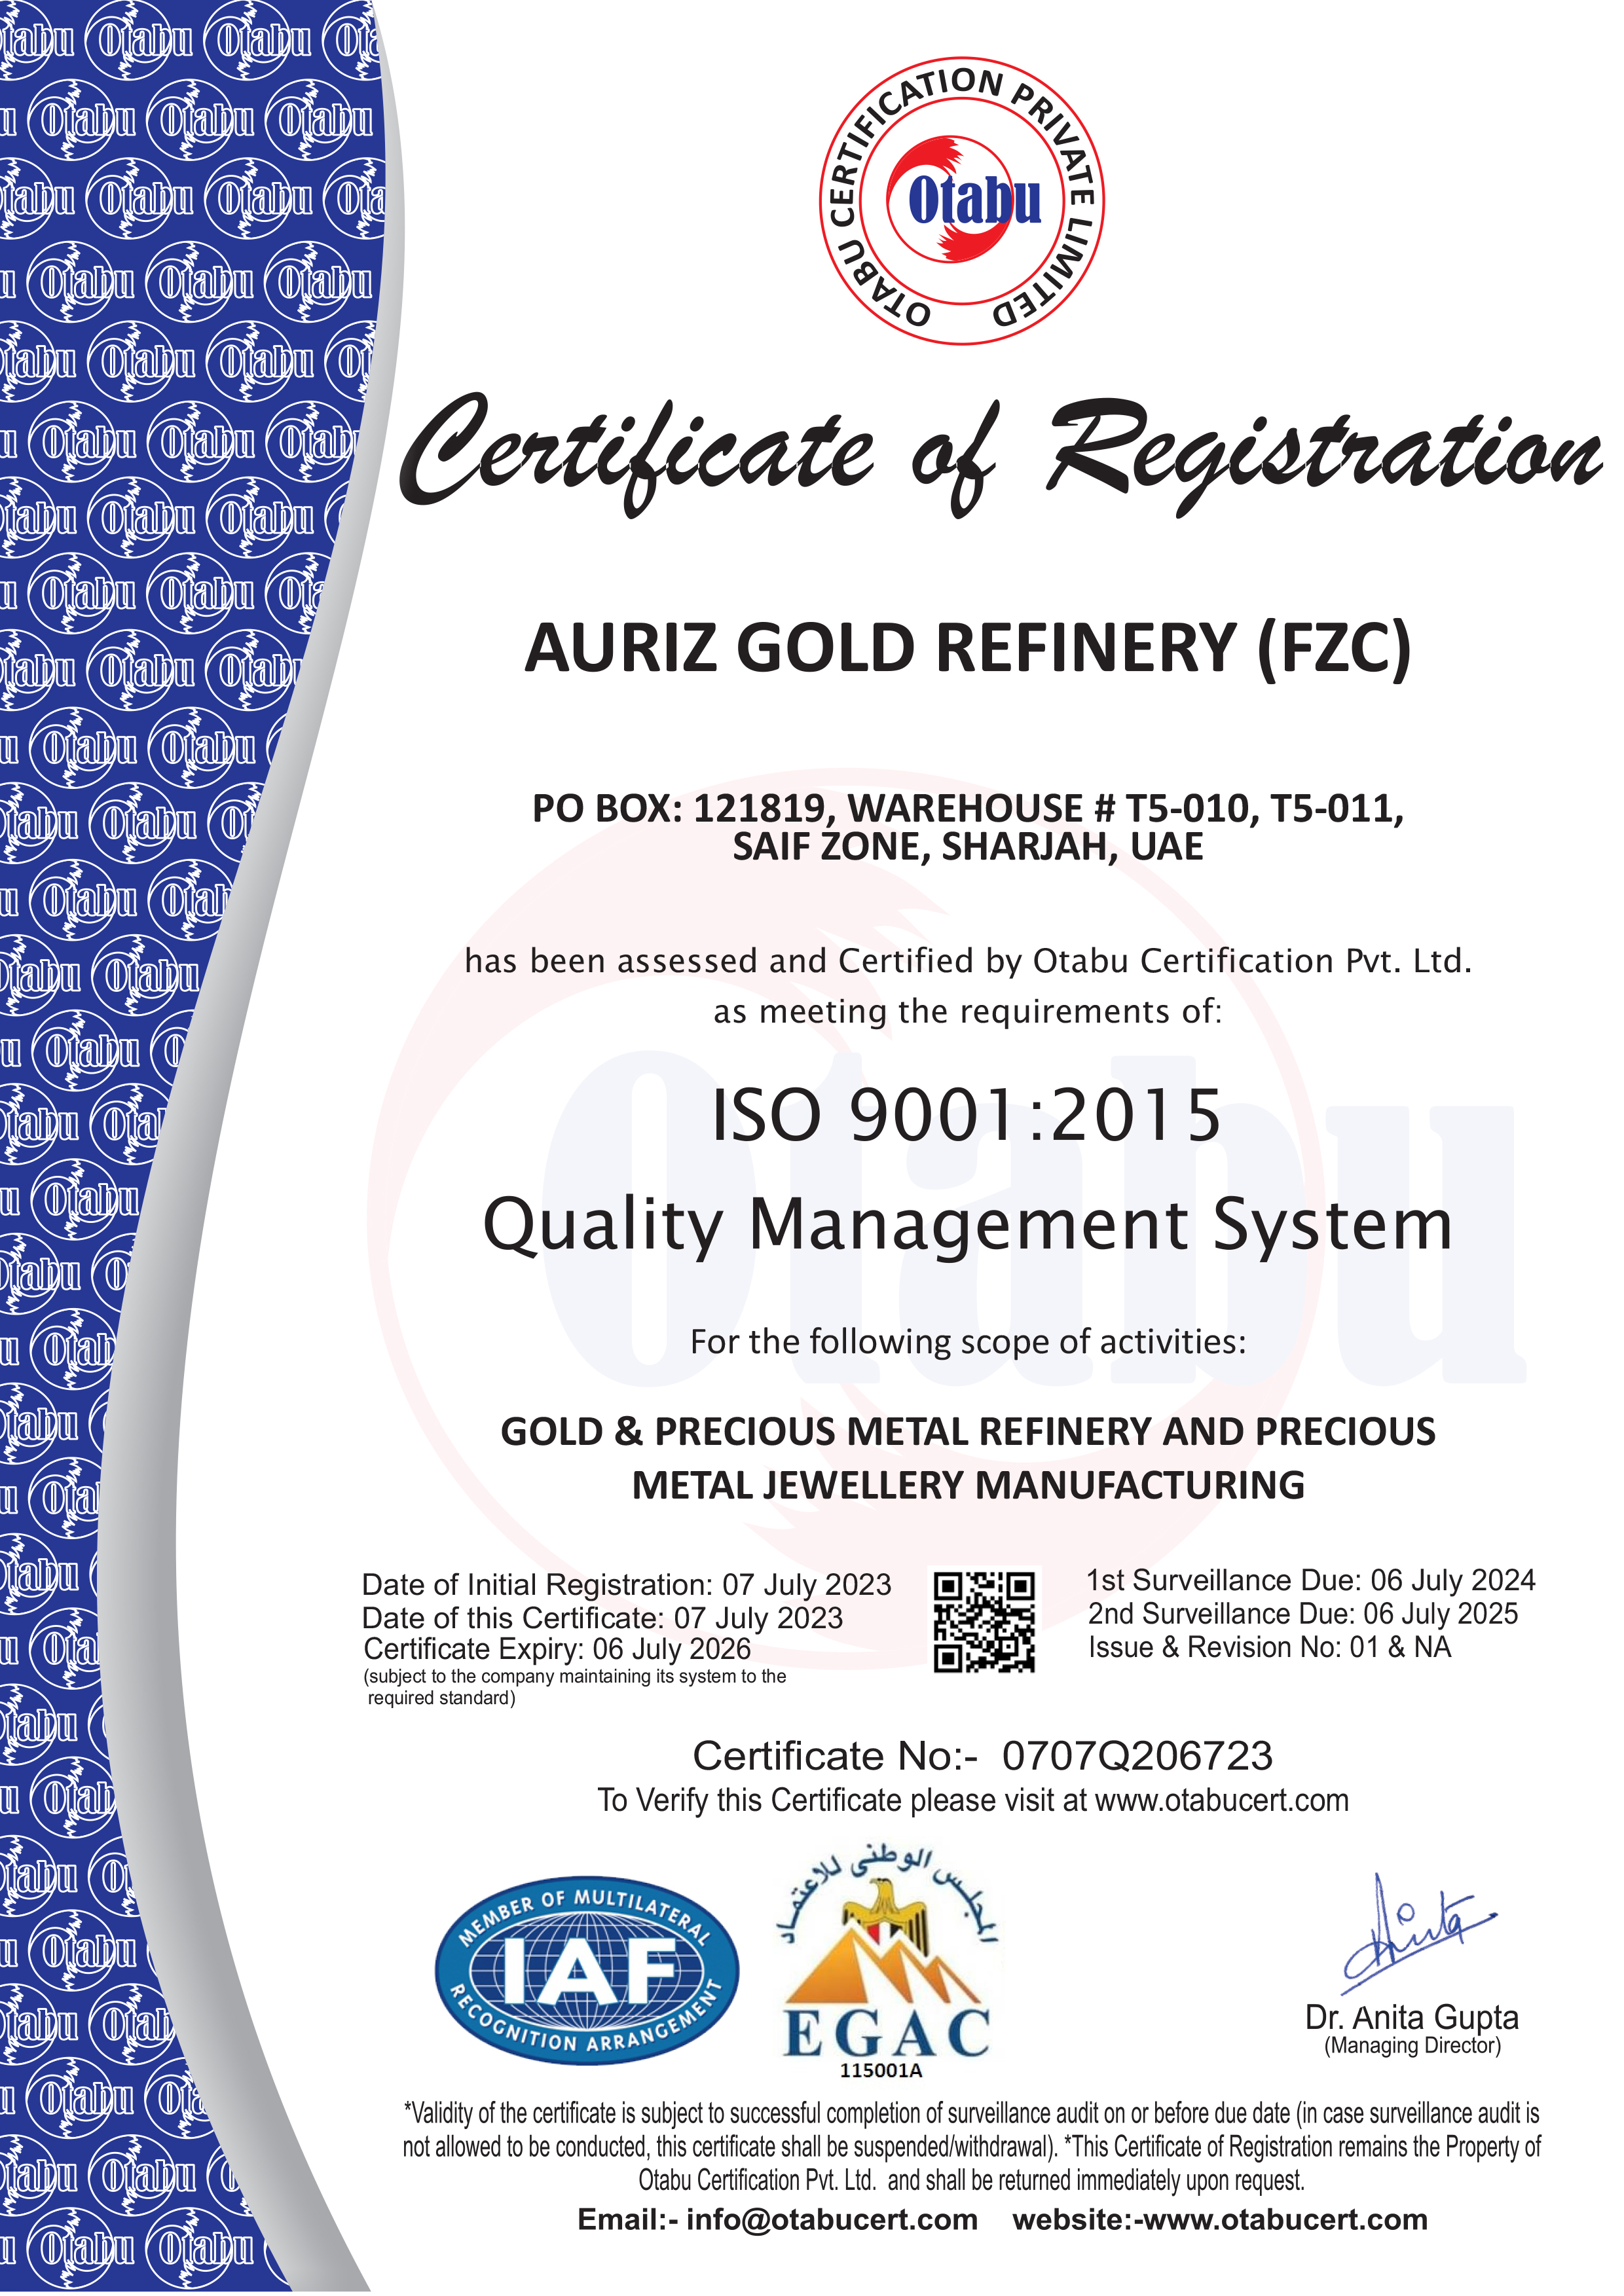 Otabu Certification